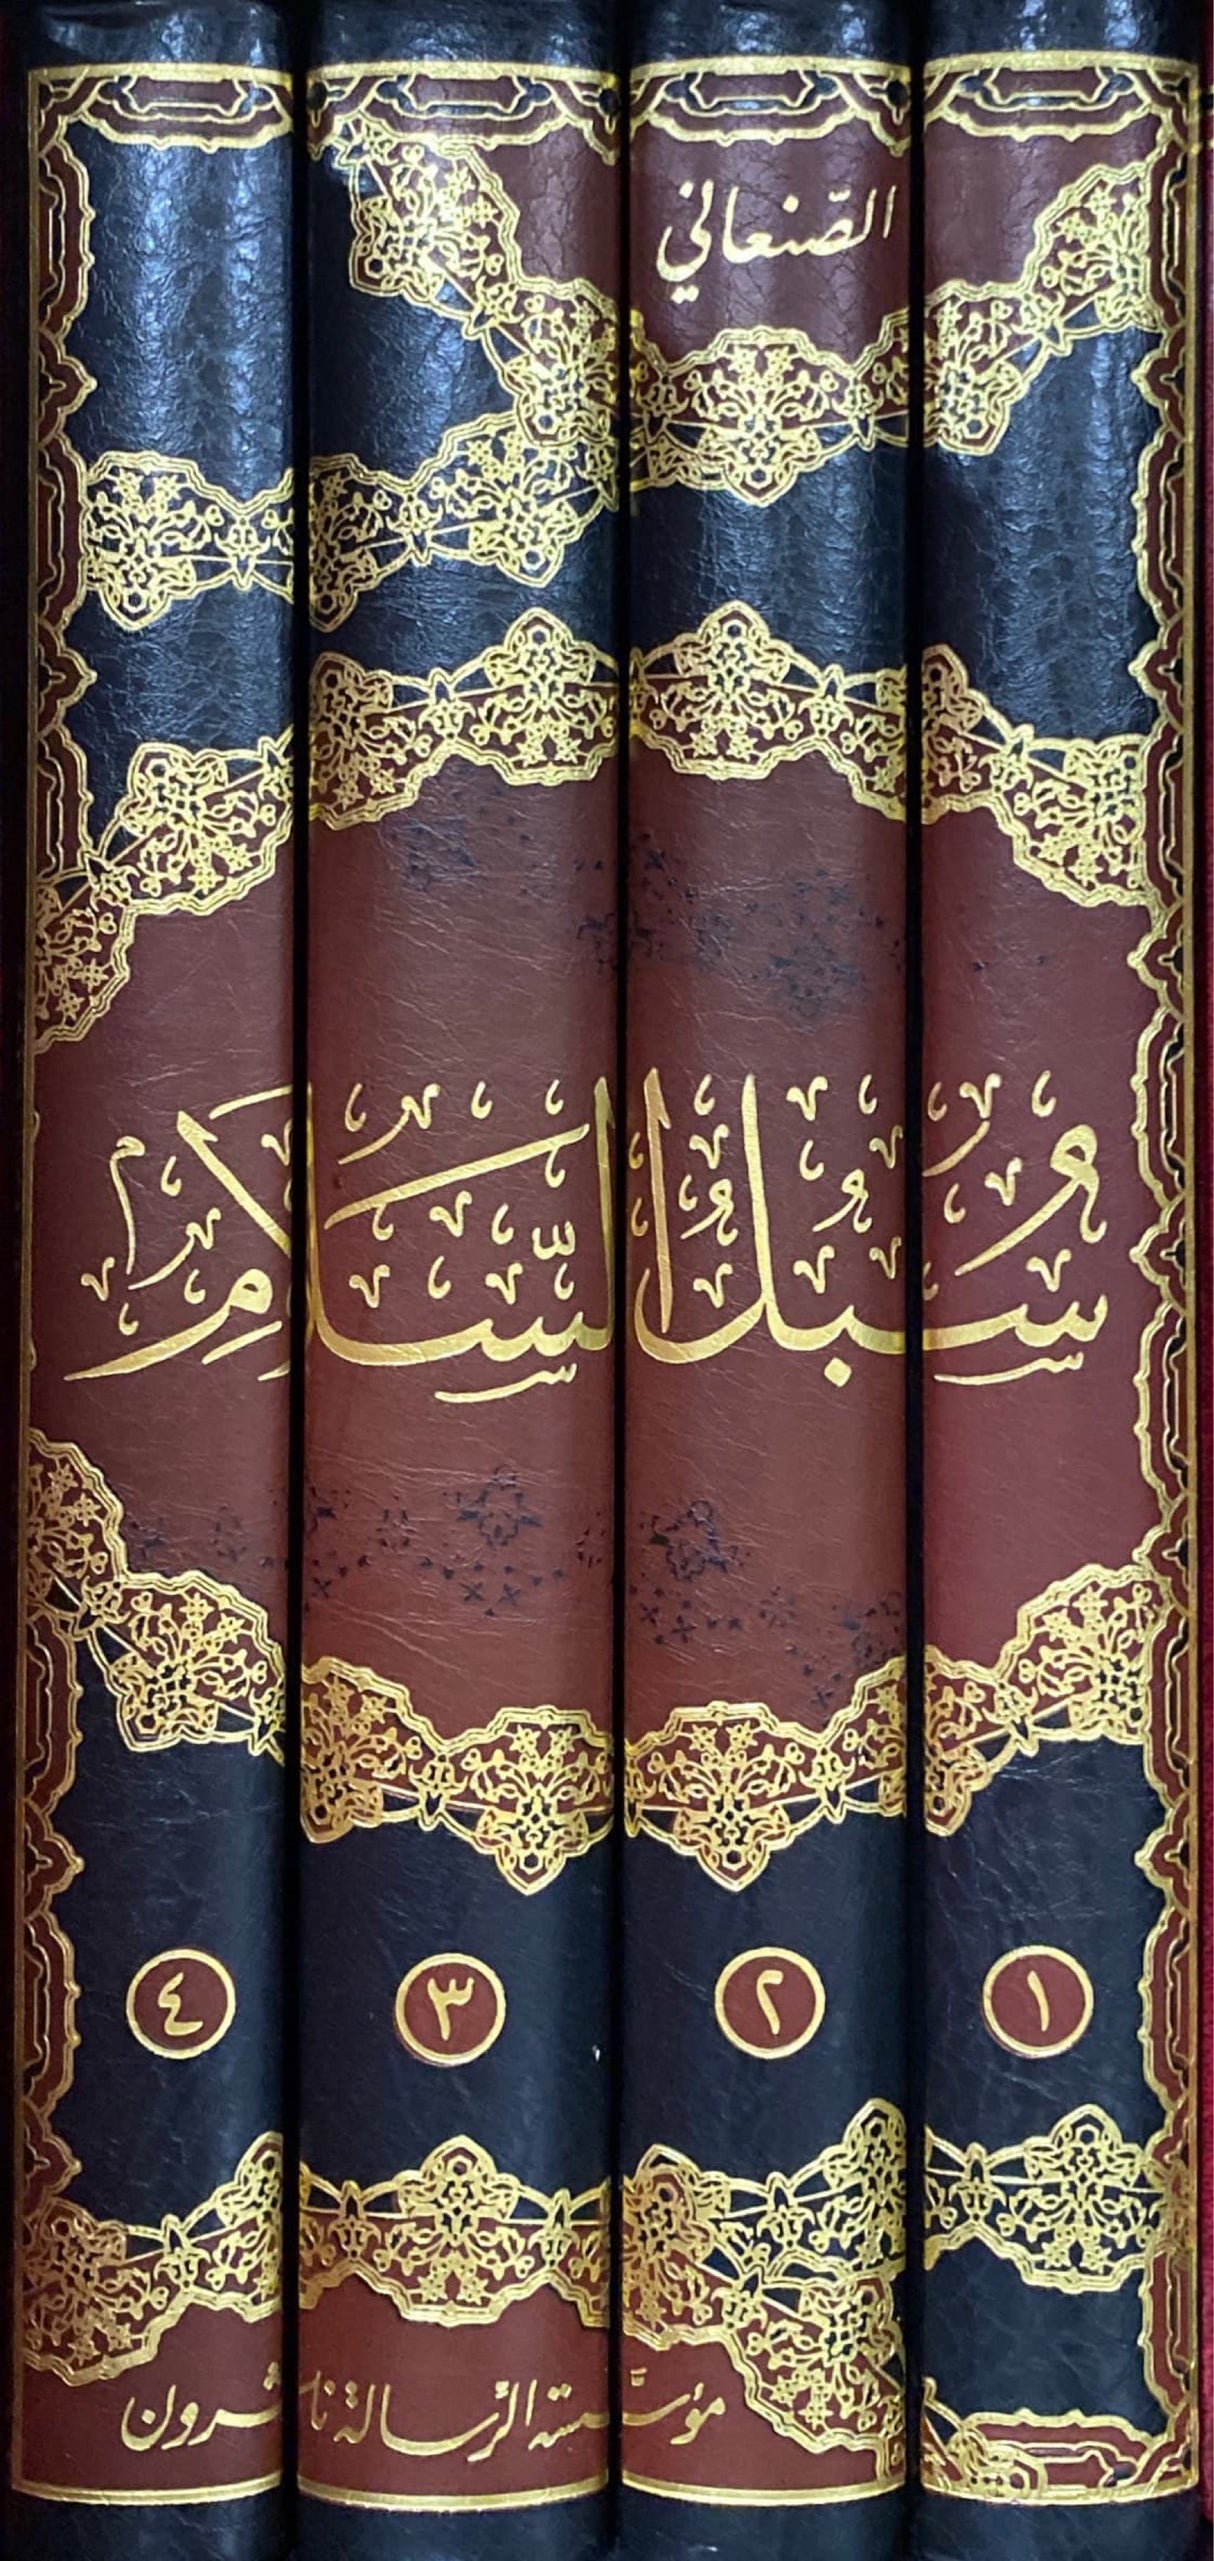 سبل السلام الموصلة الى بلوغ المرام    Subul As Salam (Risalah) (4 Volume Set)